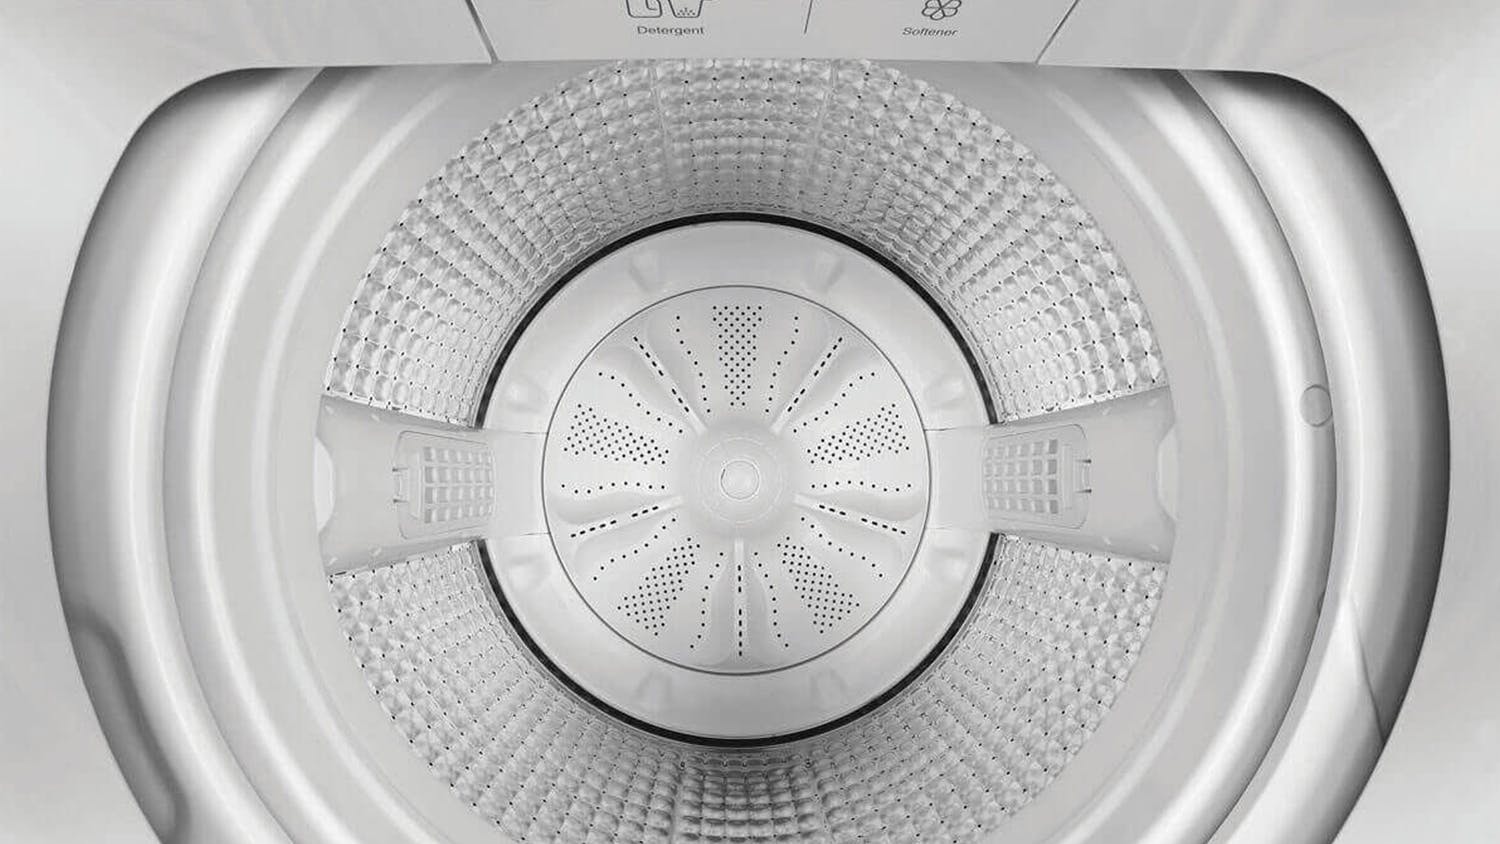 Haier 7kg 12 Program Top Loading Washing Machine - White (HWT07AN1)